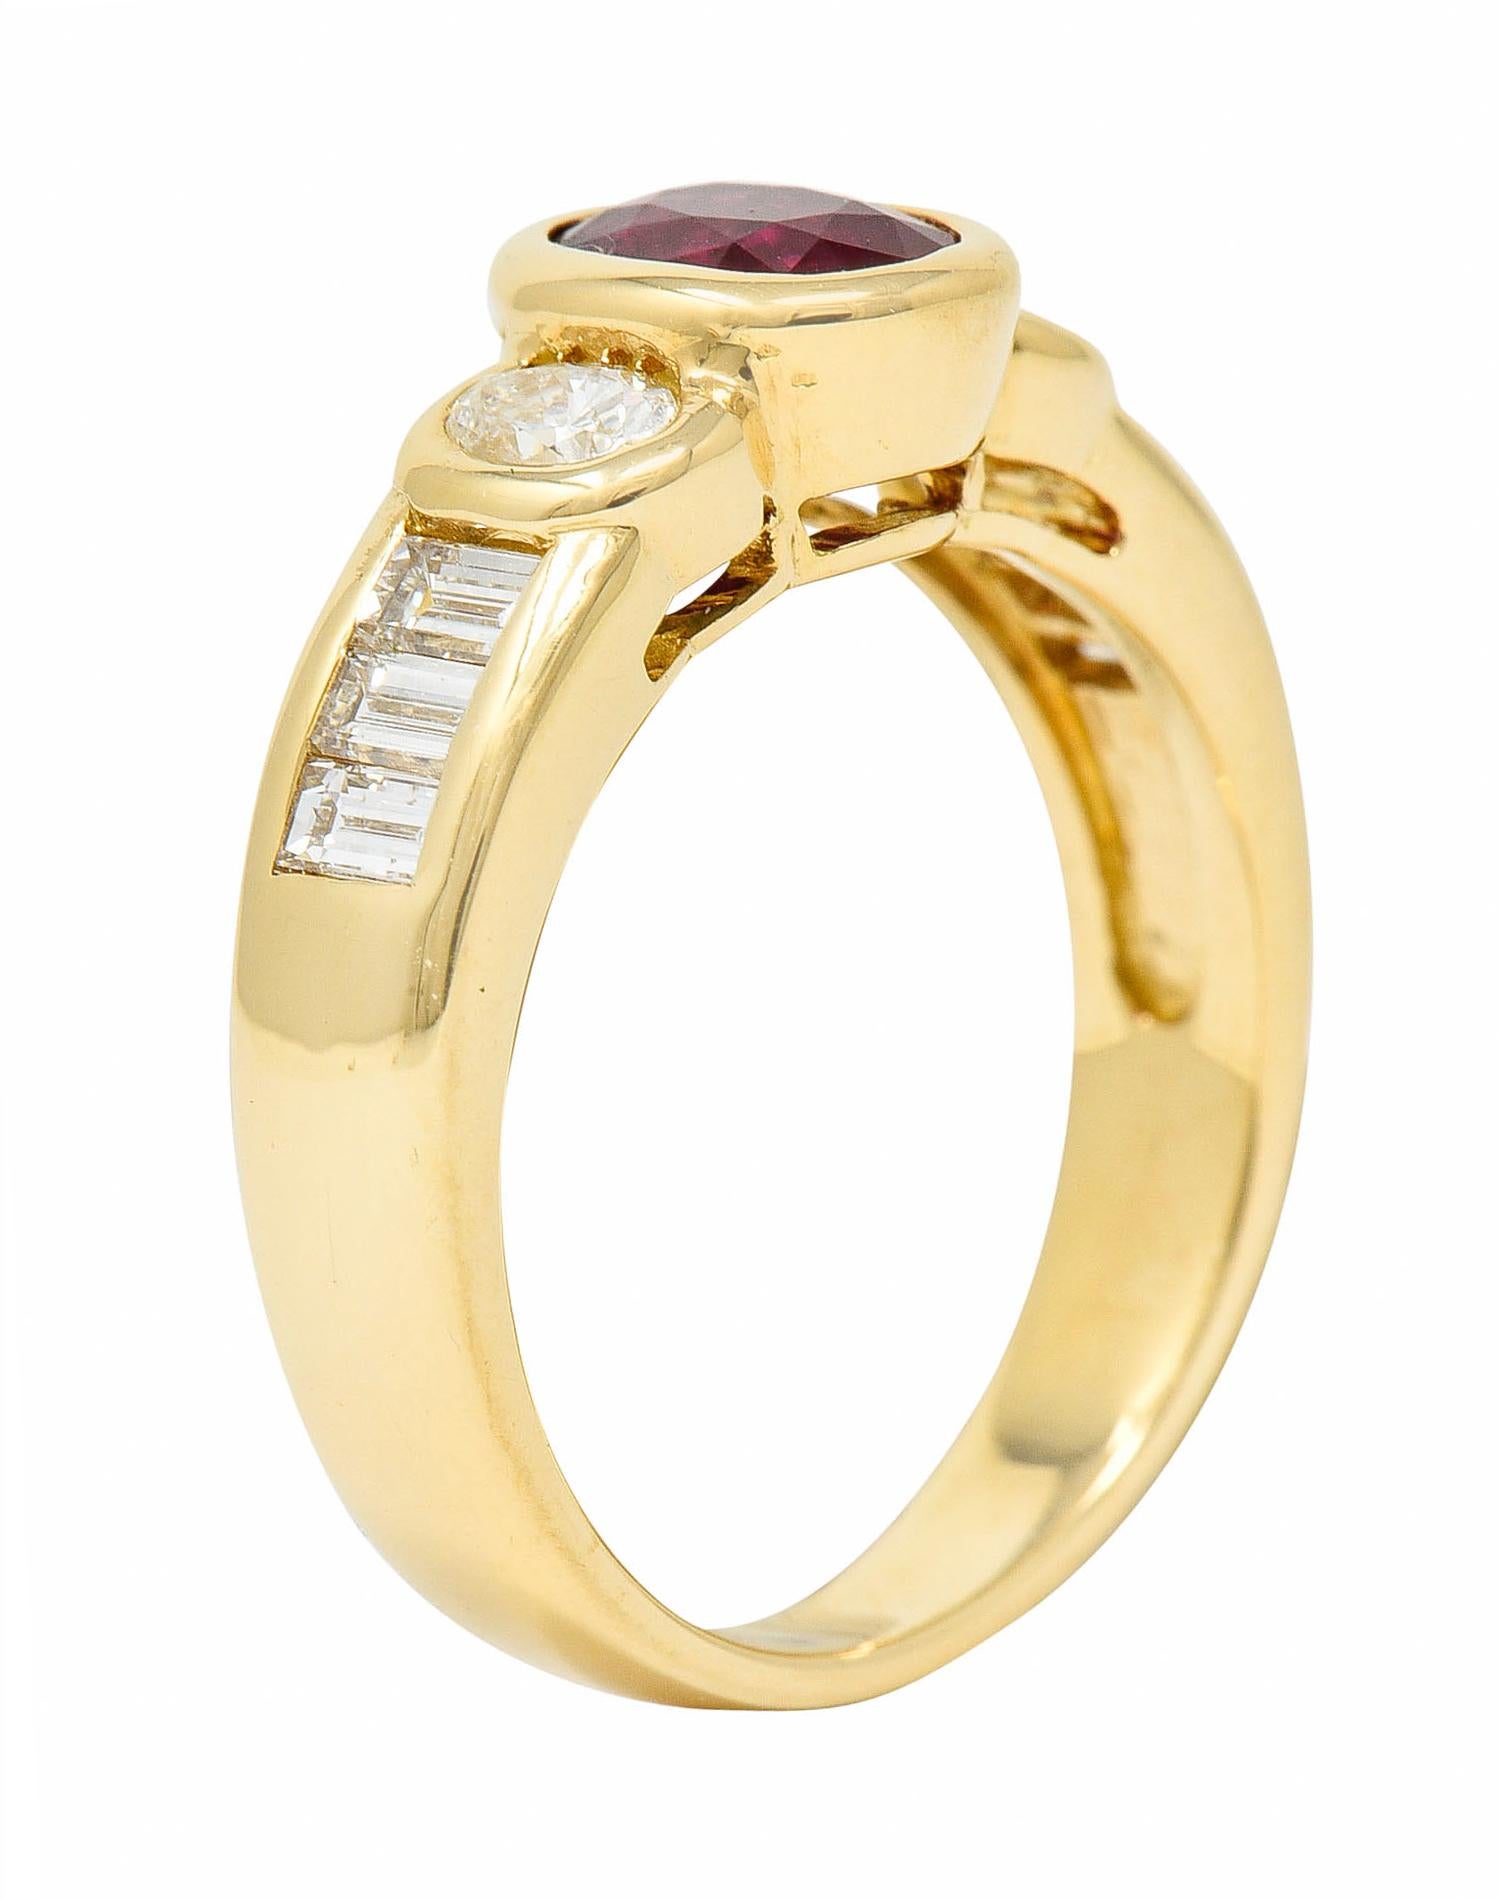 Mellerio Paris Vintage 2.10 Carats Ruby Diamond 18 Karat Gold Gemstone Ring 4